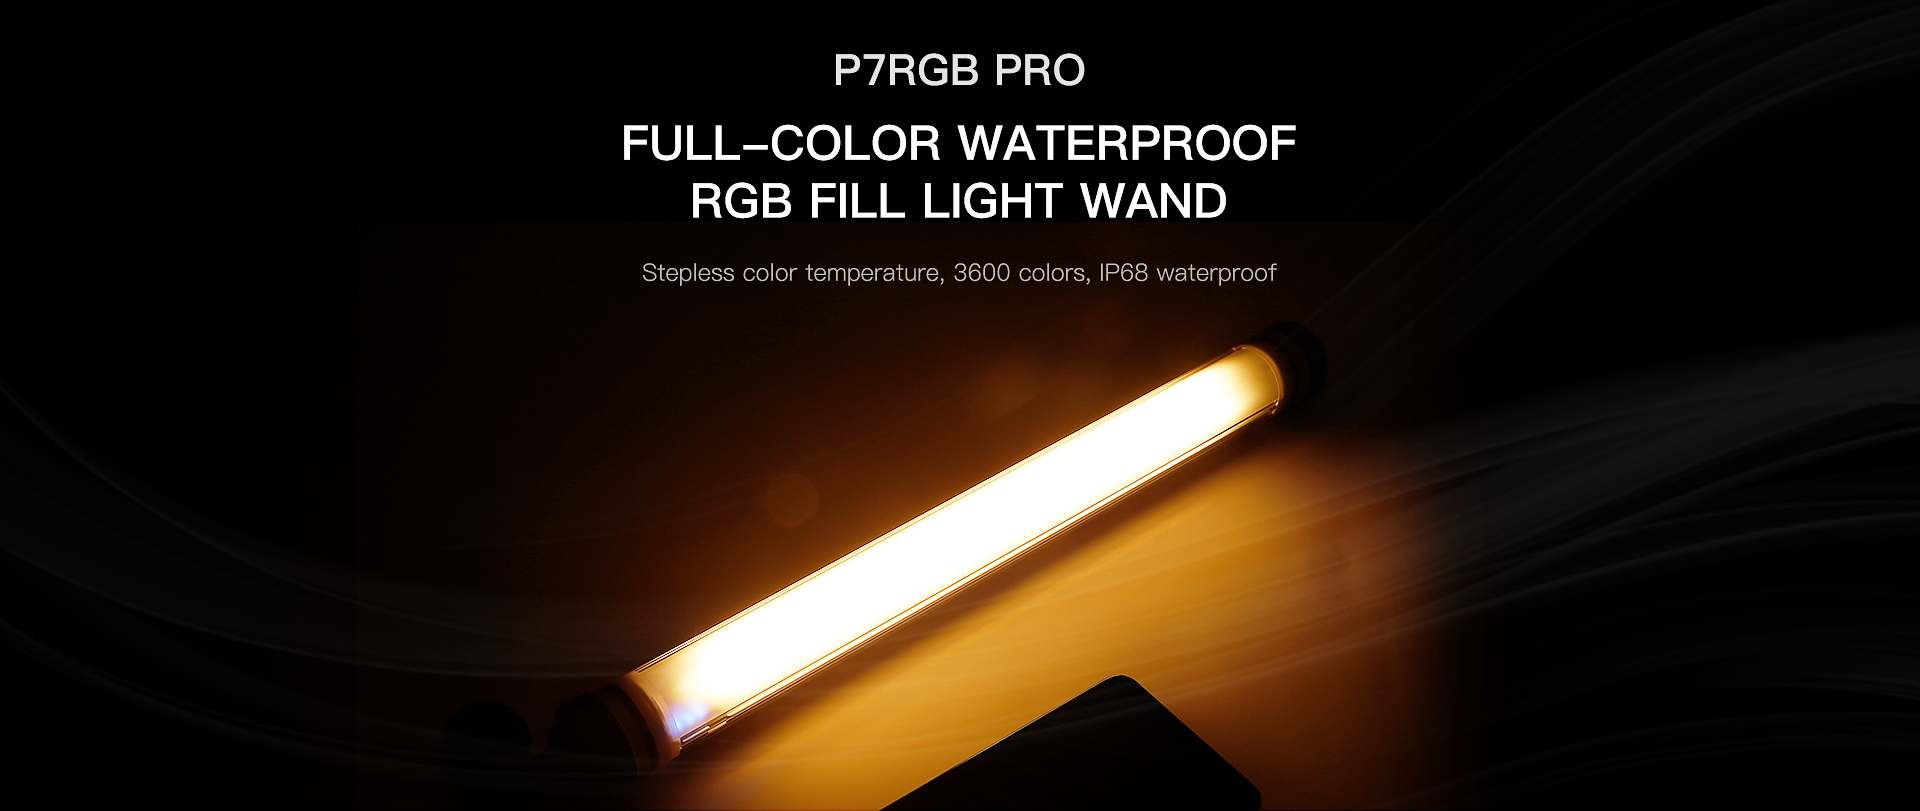 P7RGB Pro LED Waterproof light bar